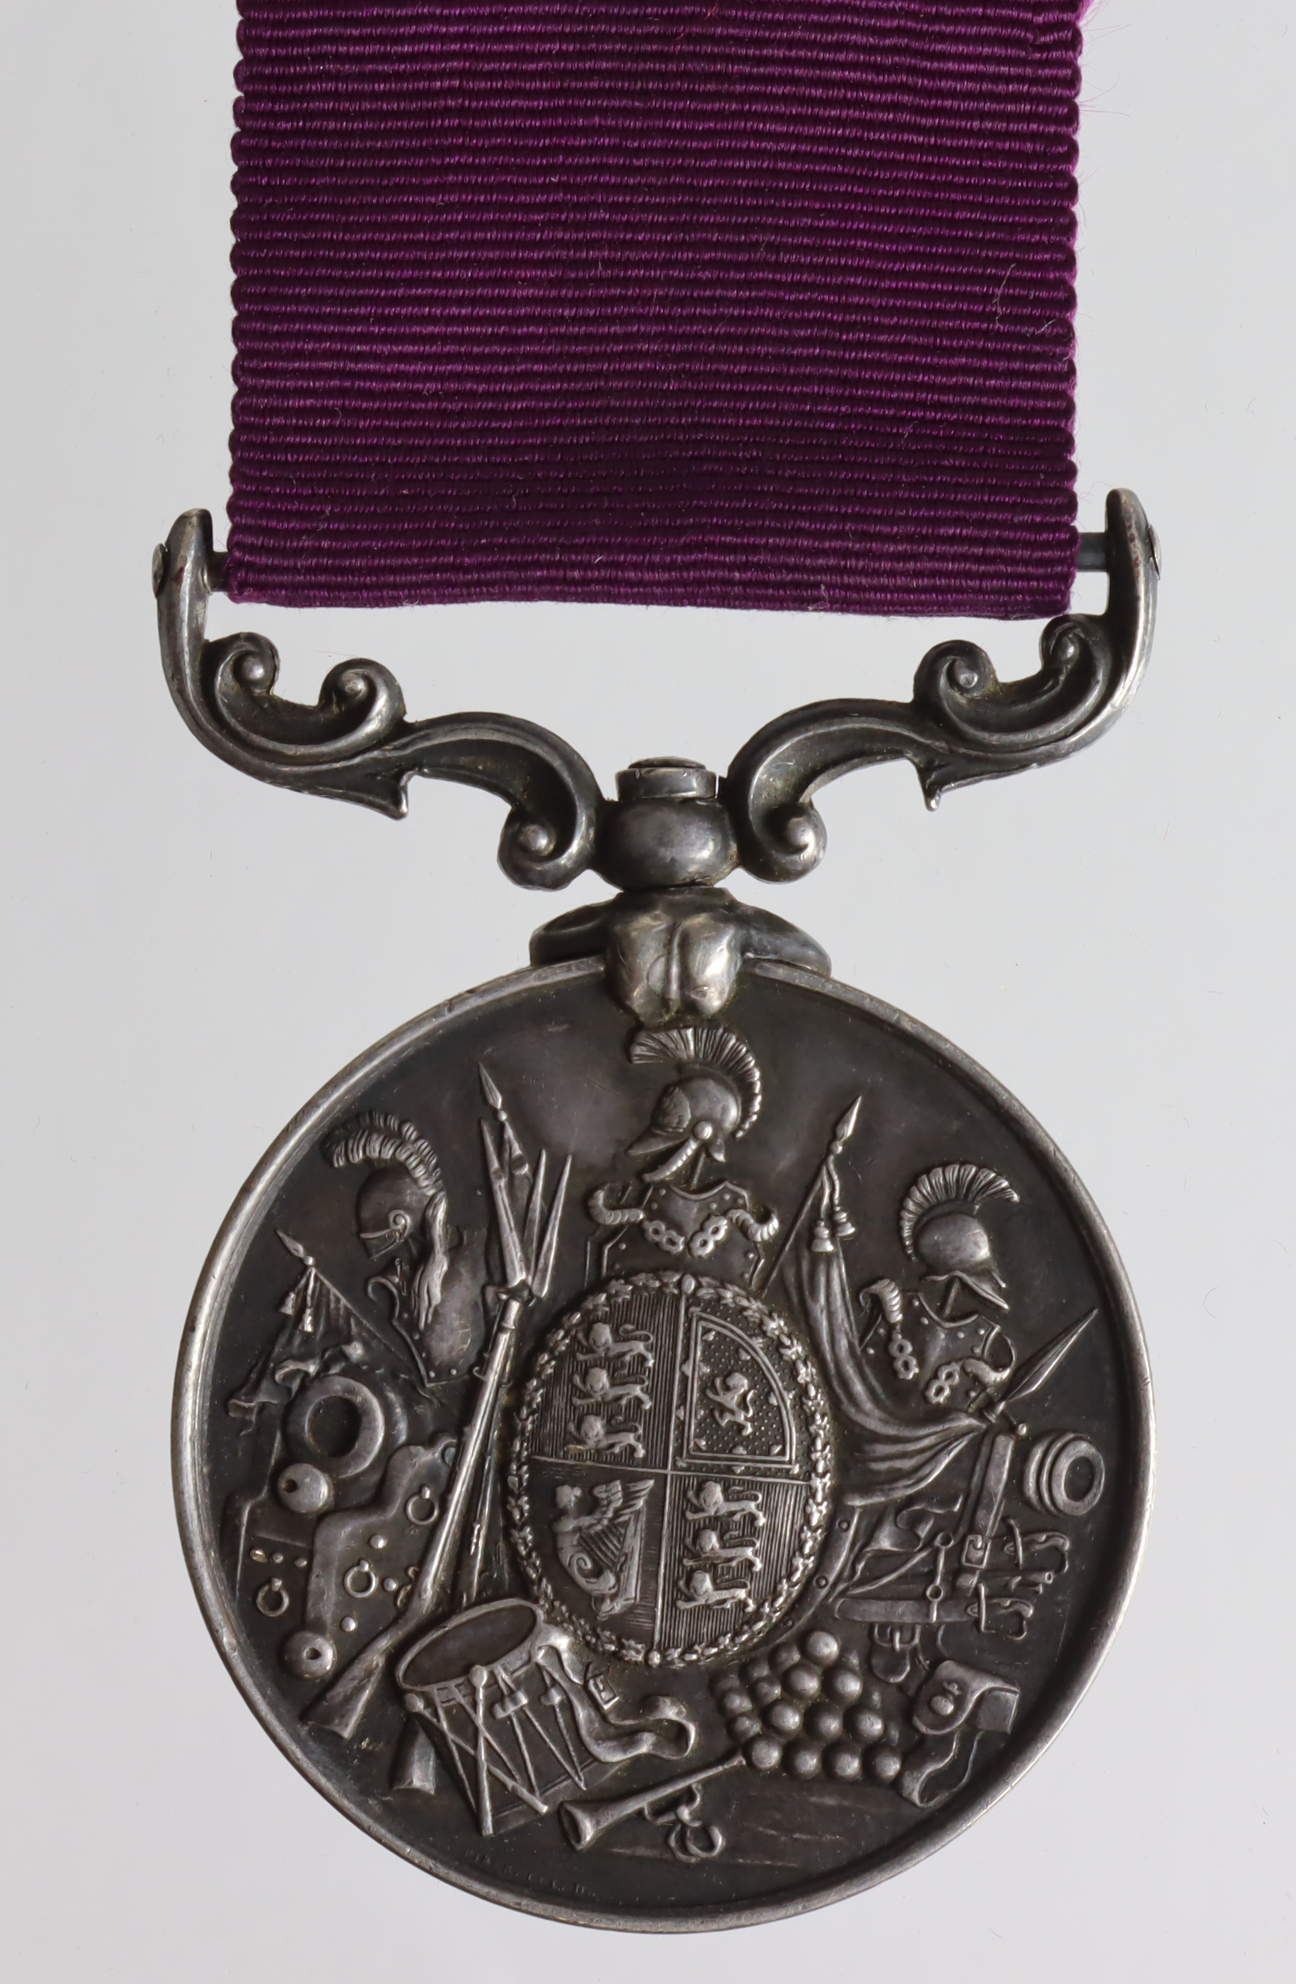 Army LSGC Medal QV named (683 Regtl Sgt Maj: J Donald, 5th Lancers). Born Hulme, Manchester. With